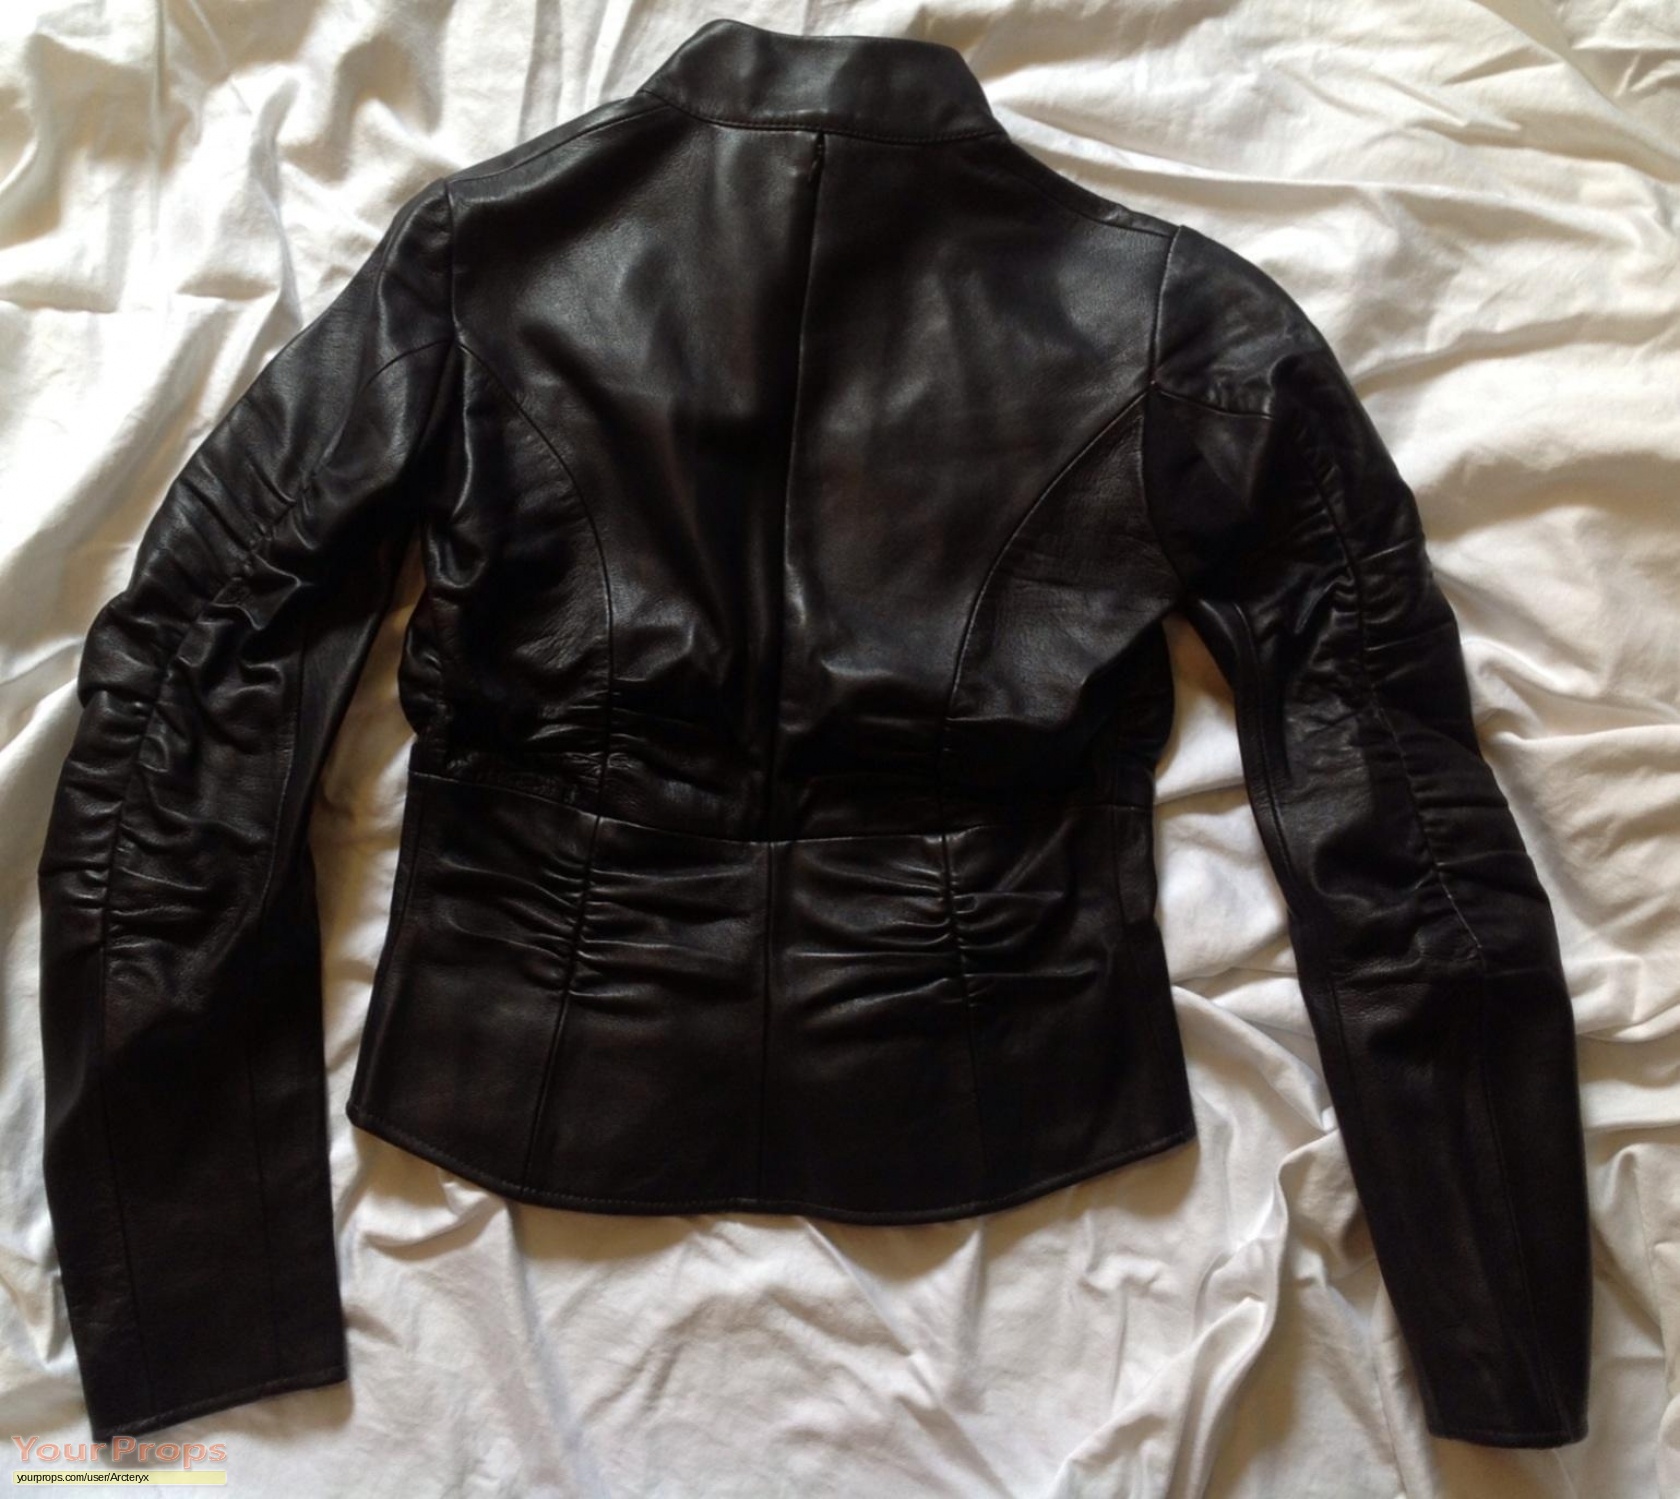 Sanctuary Ashley Magnus Leather Jacket and pants original TV series costume